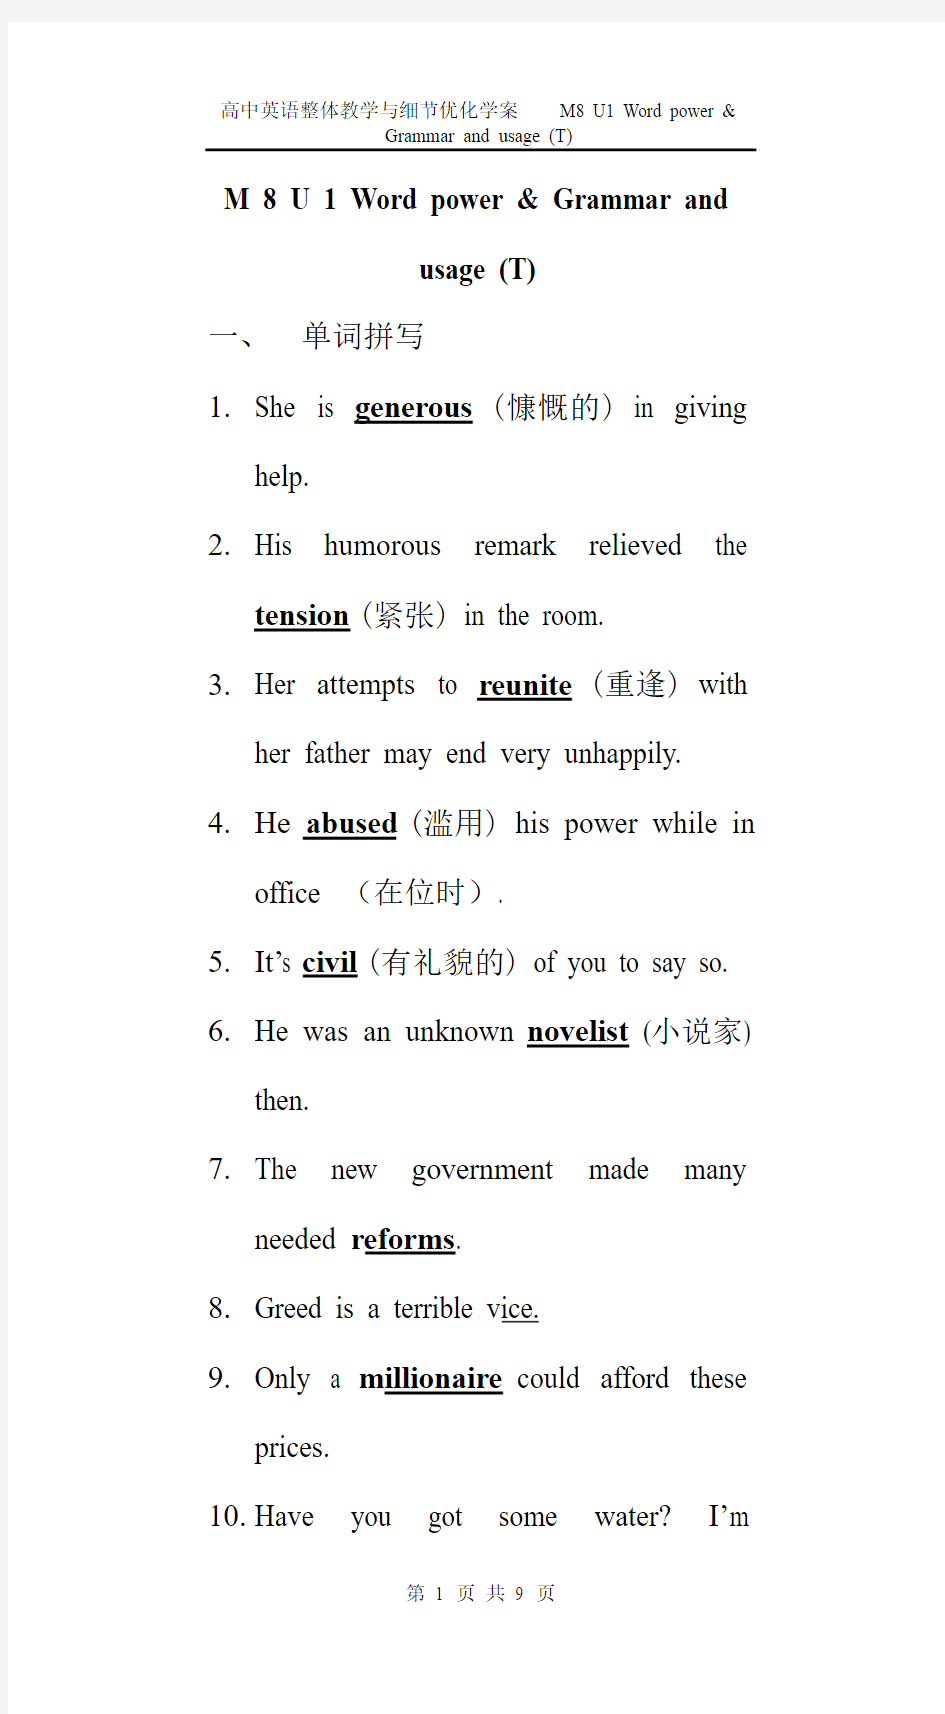 M8U1 Word power & Grammar and usage (T)